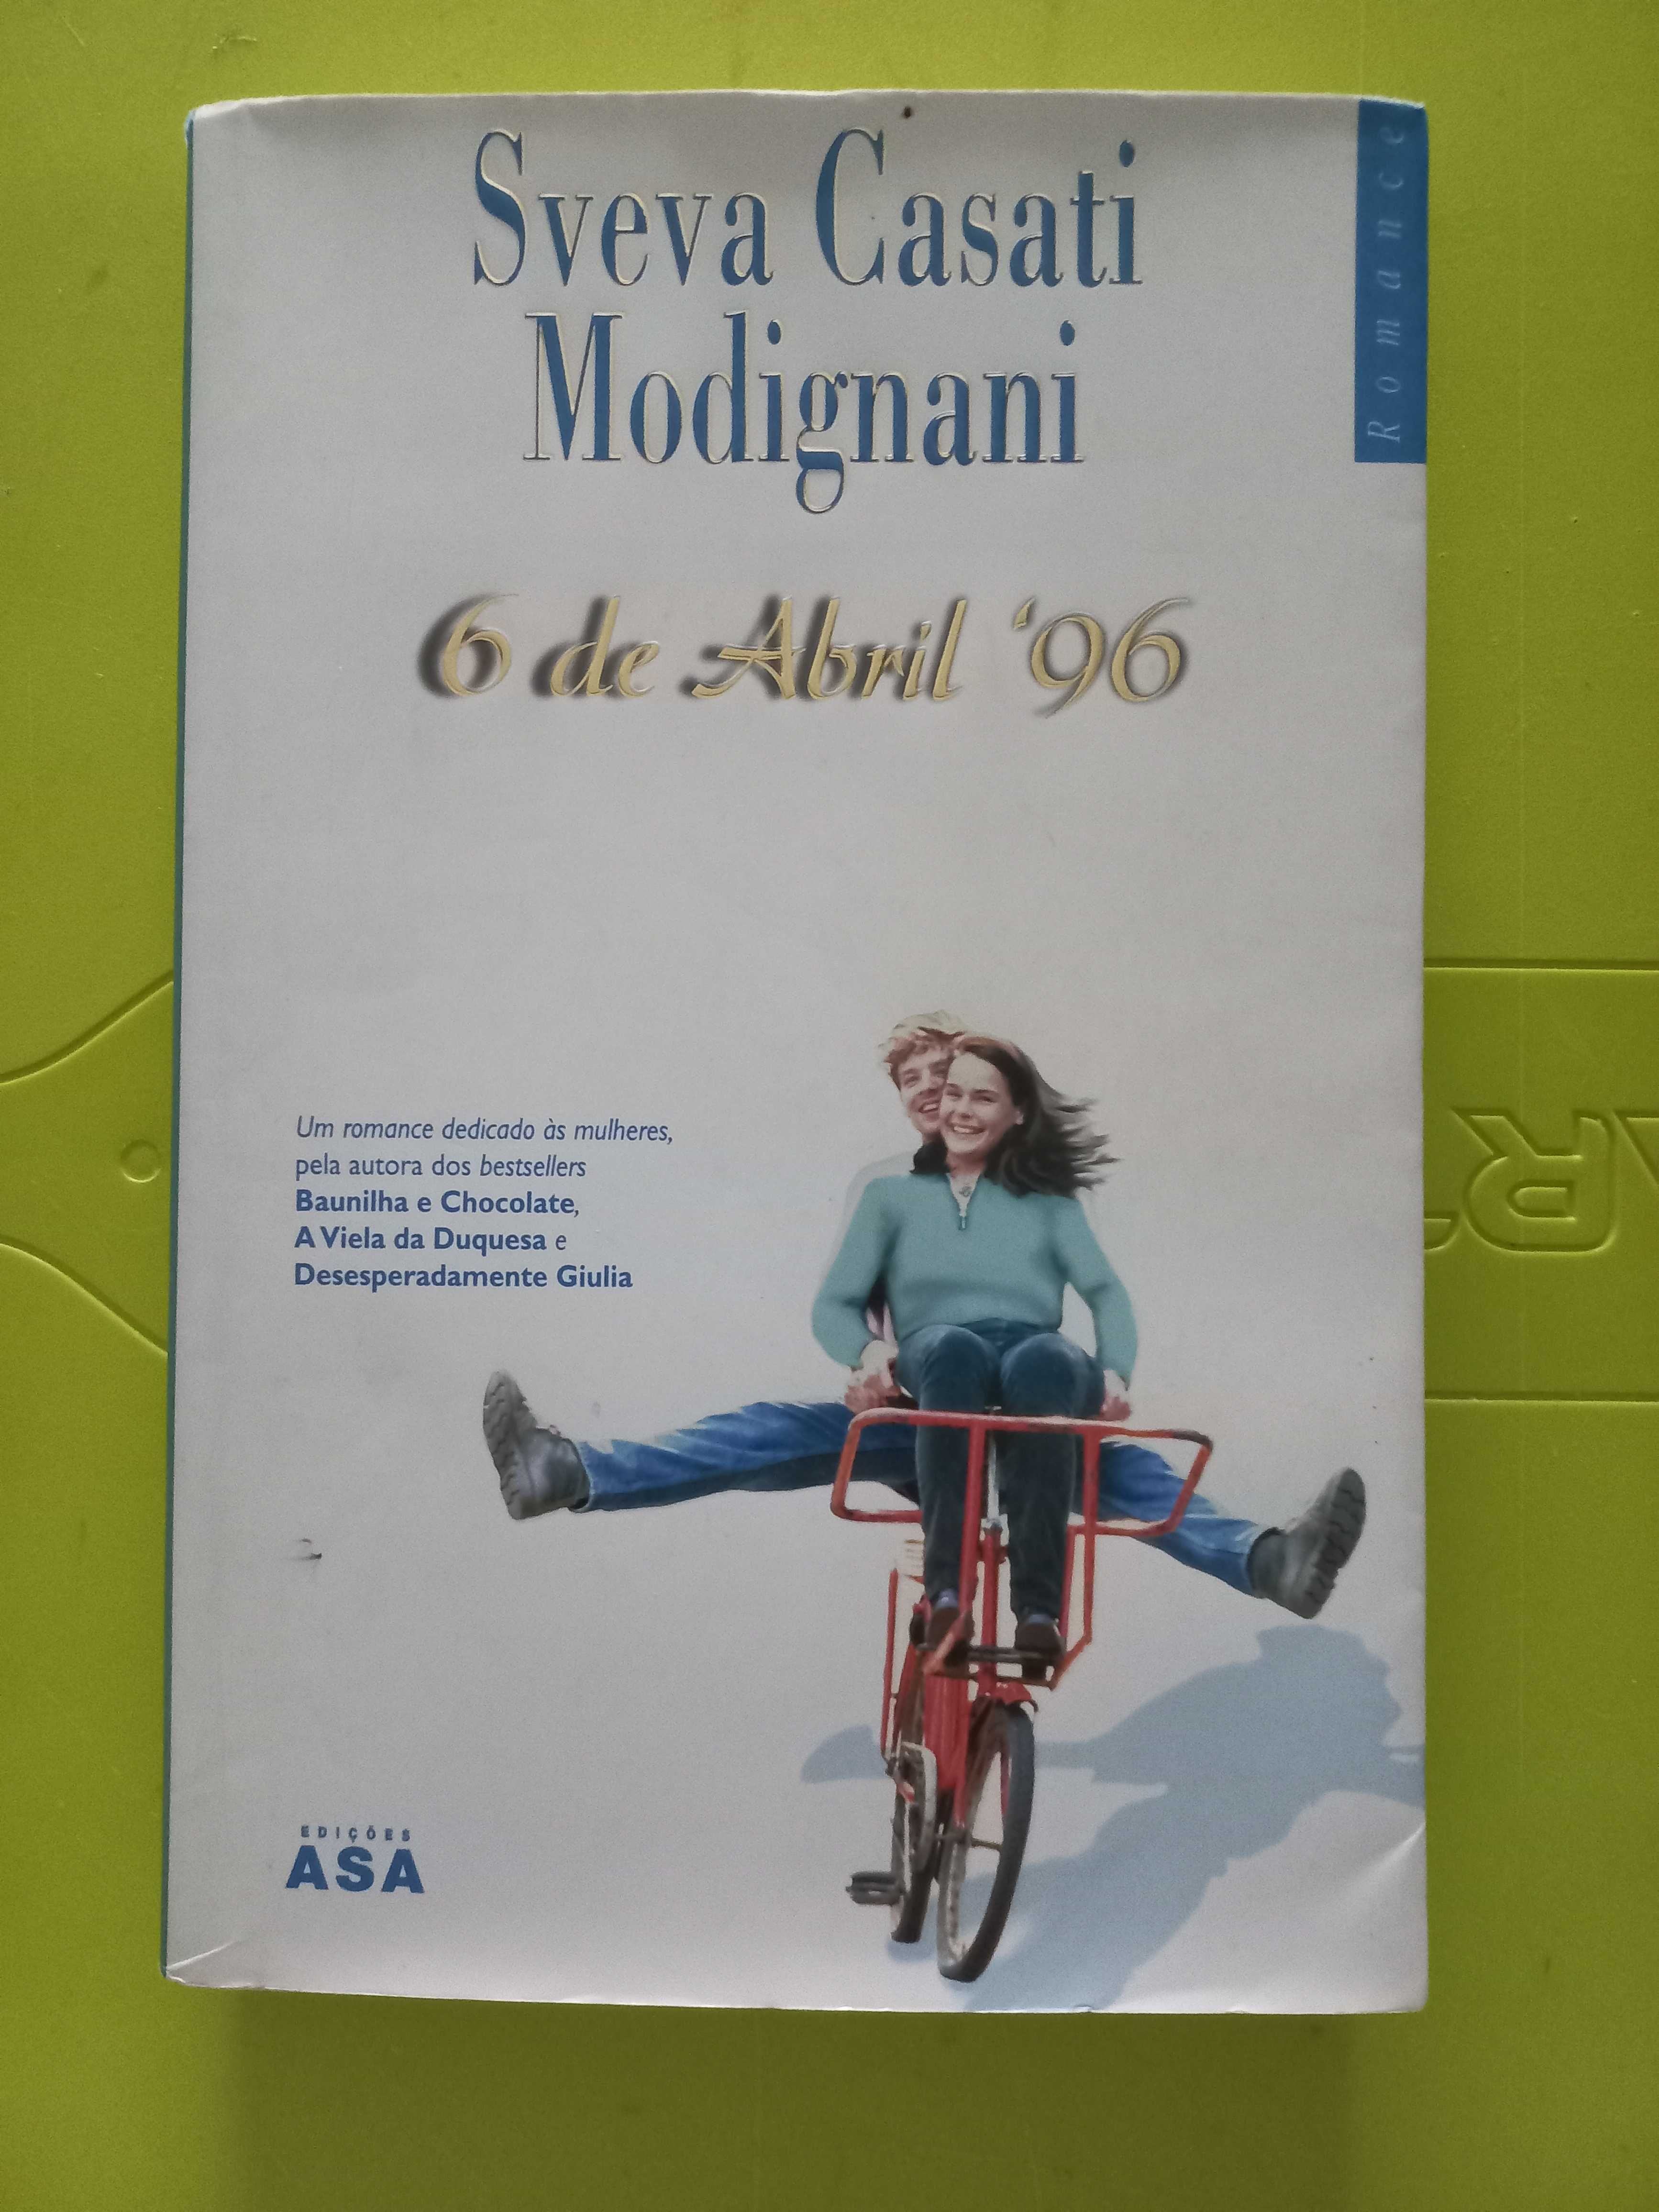 6 de Abril '96  -   Sveva Casati Modignani - 12€